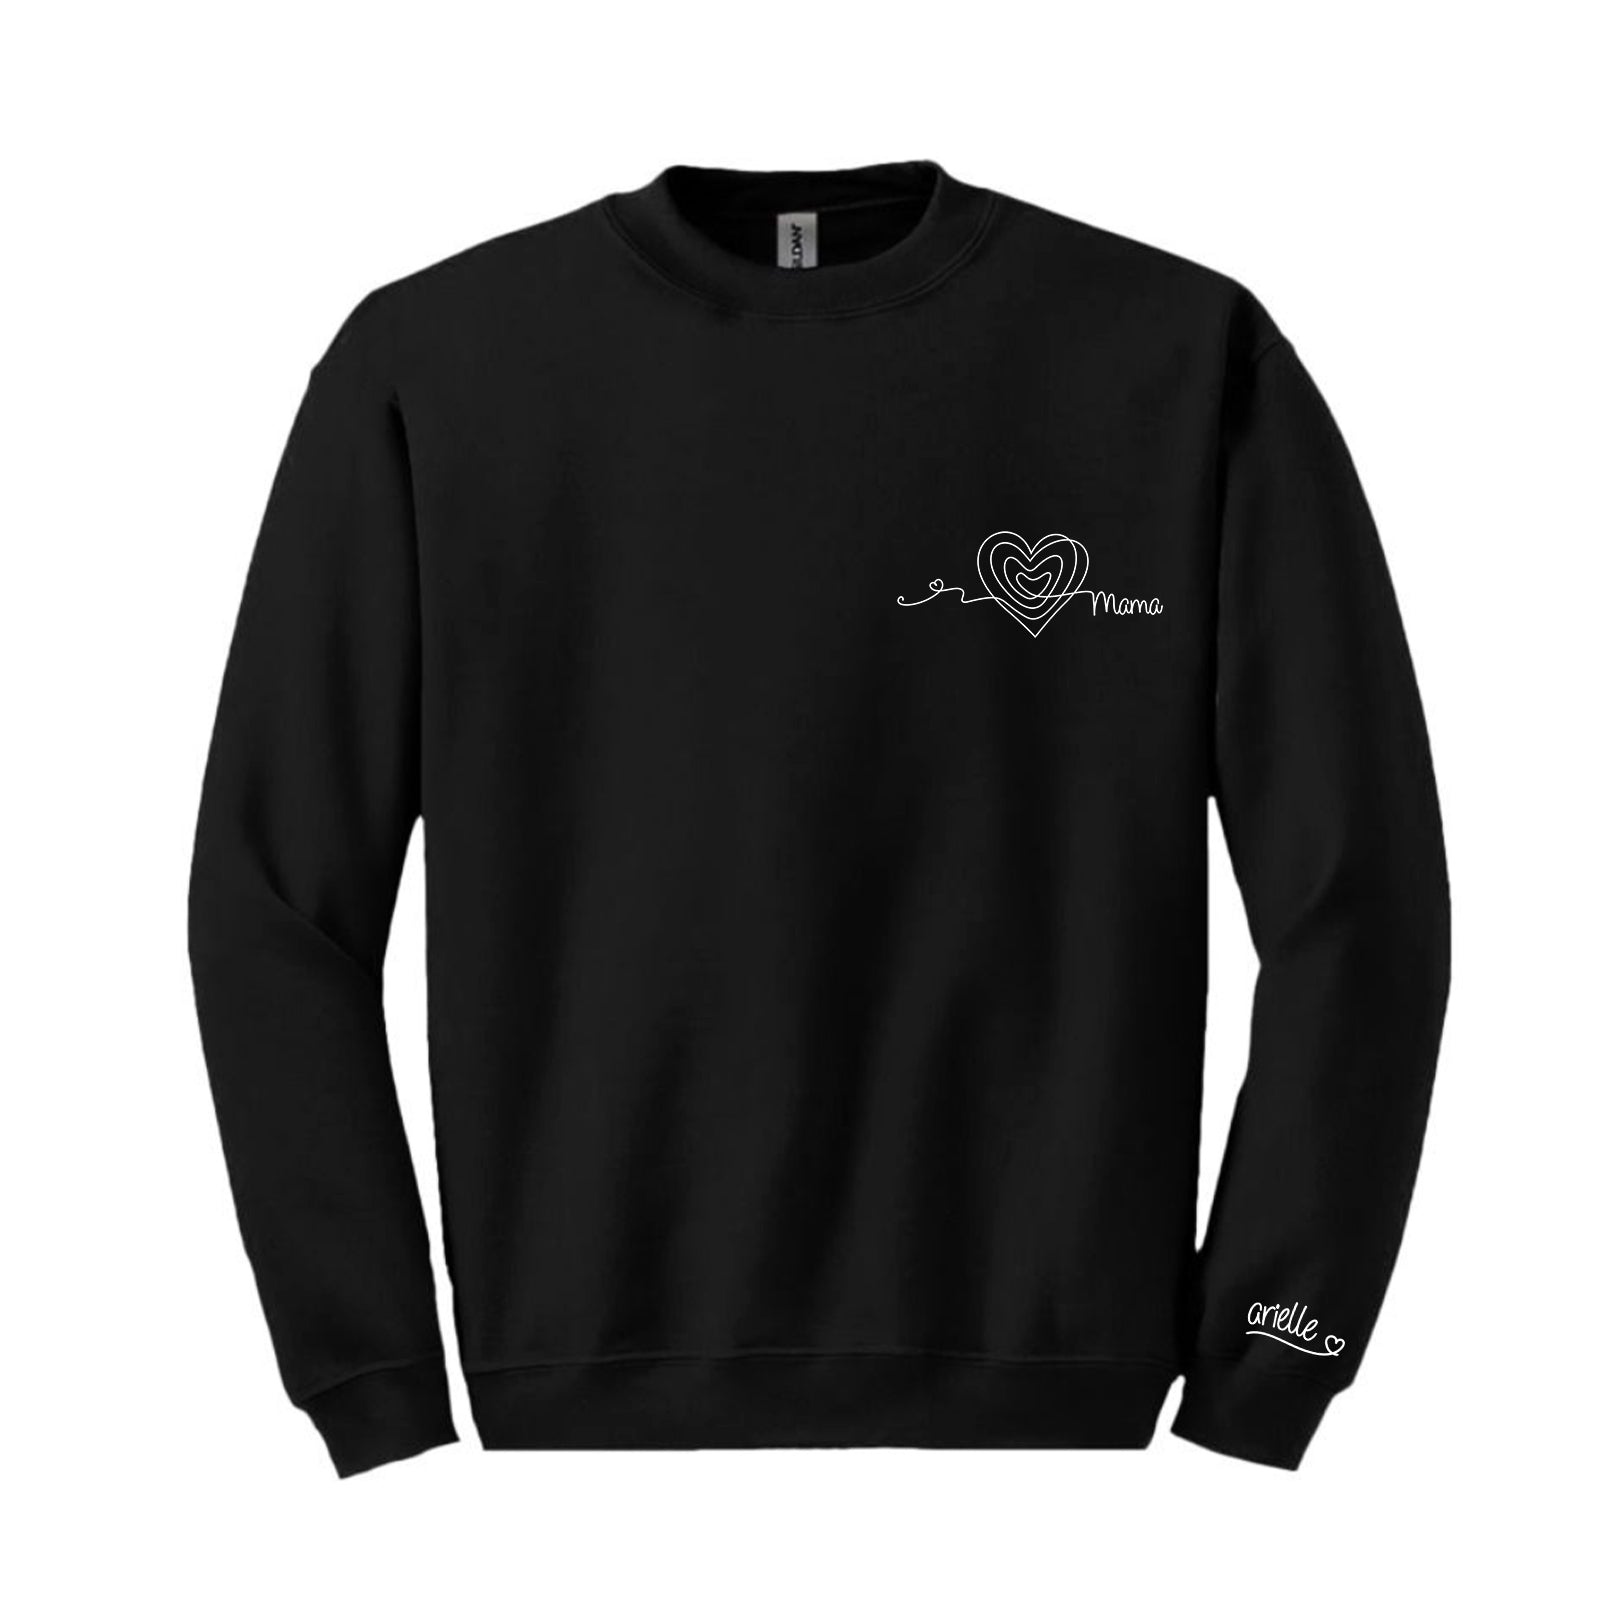 ADULT Long Sleeve Sweatshirt - Mama Heart